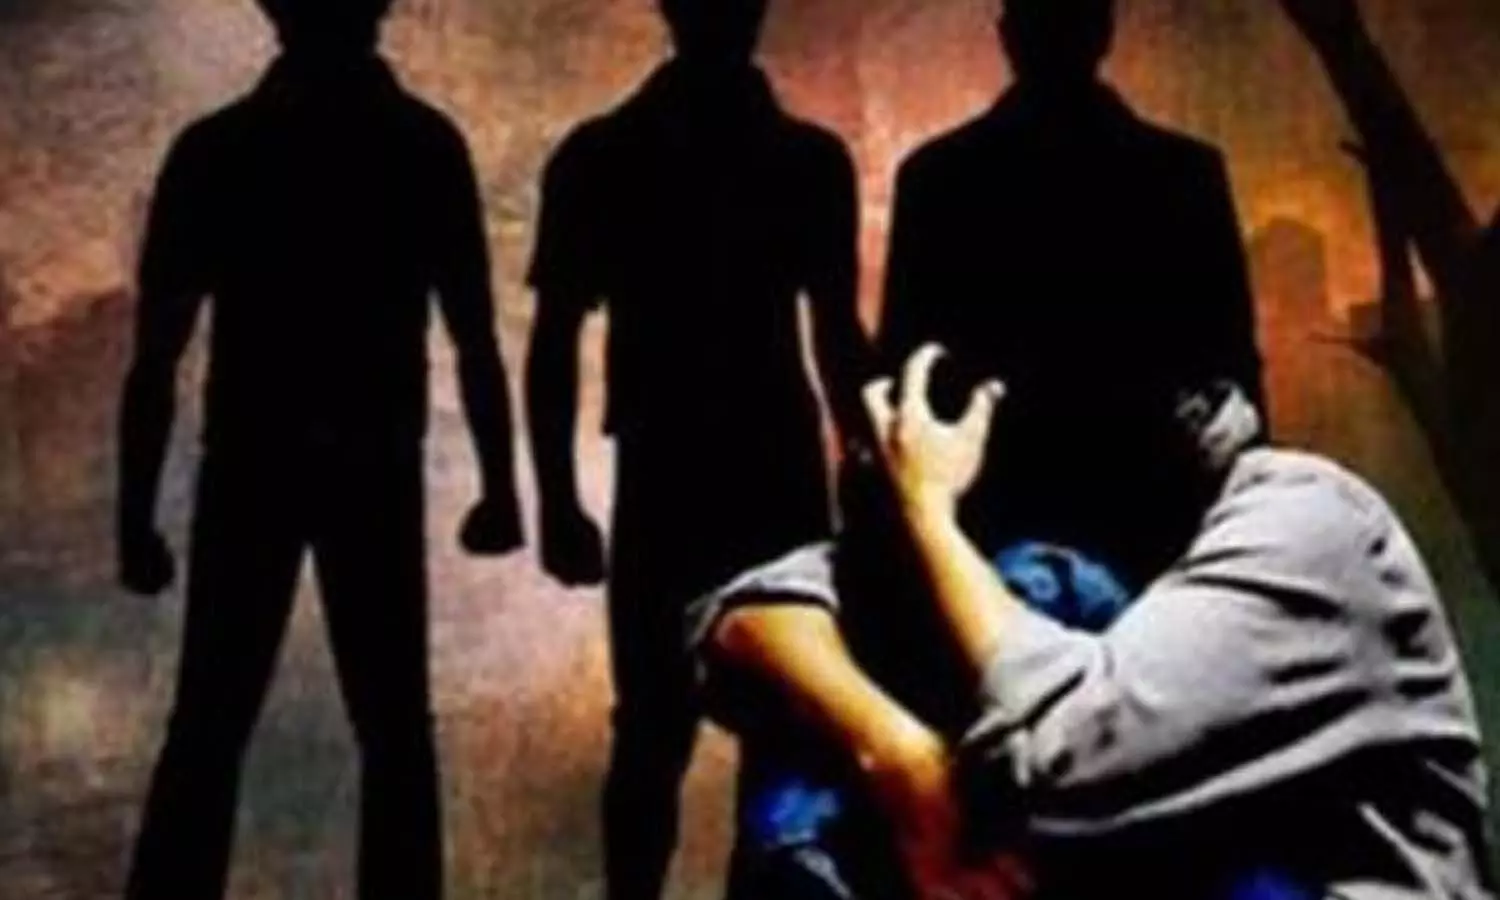 Teenagers gang-raped, secret revealed after five months